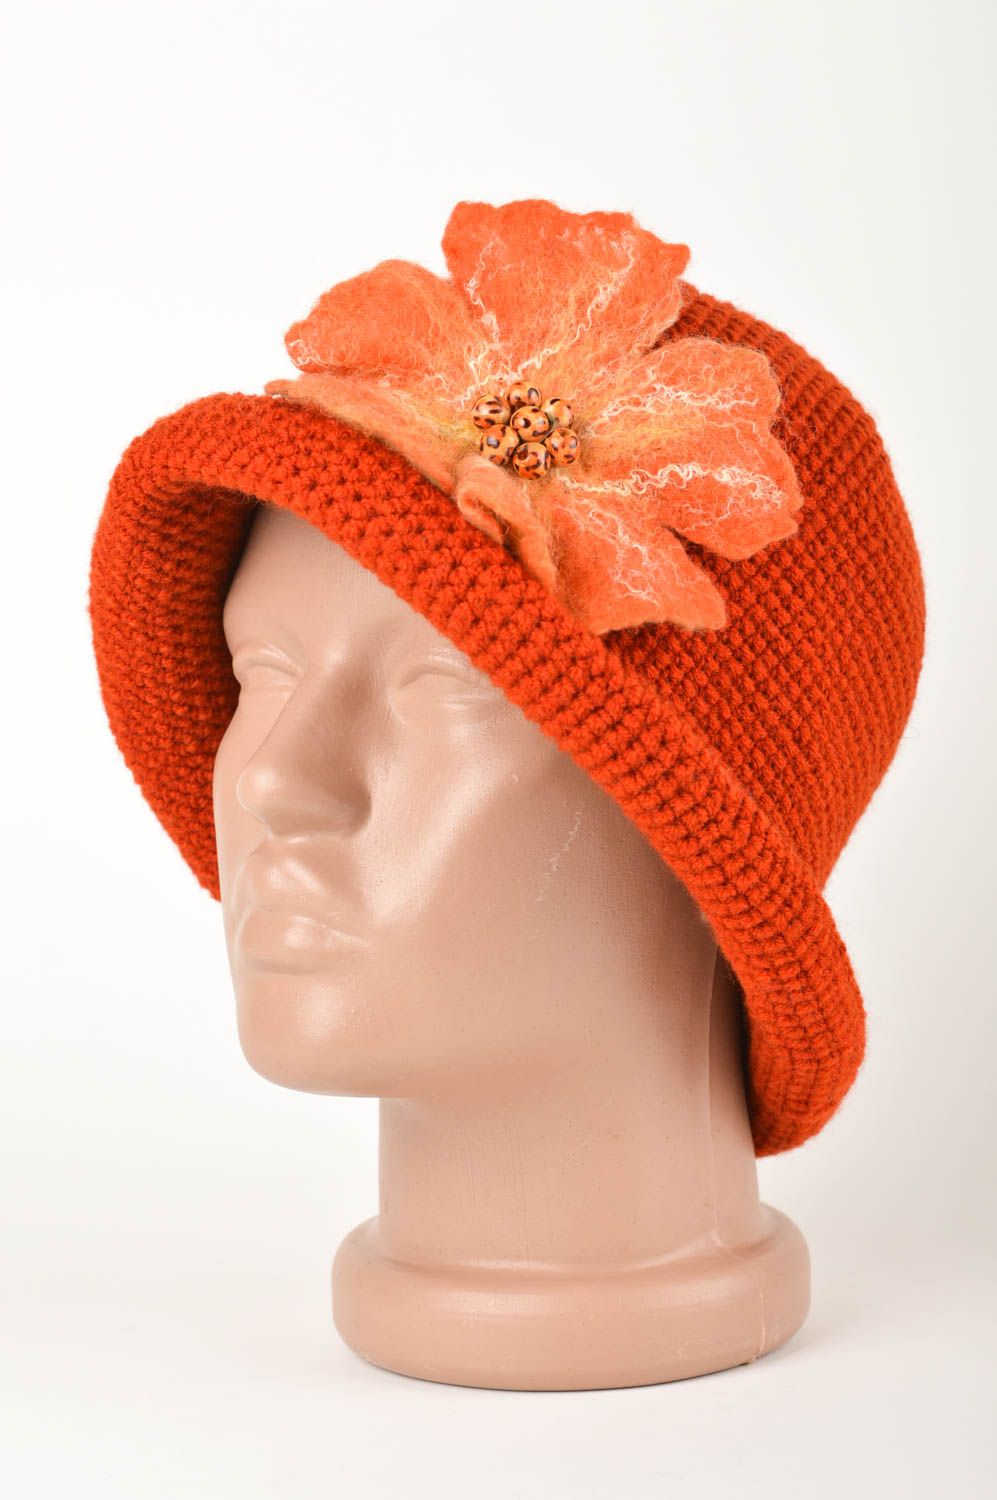 Handmade crocheted cap warm winter cap with flower winter accessories photo 1